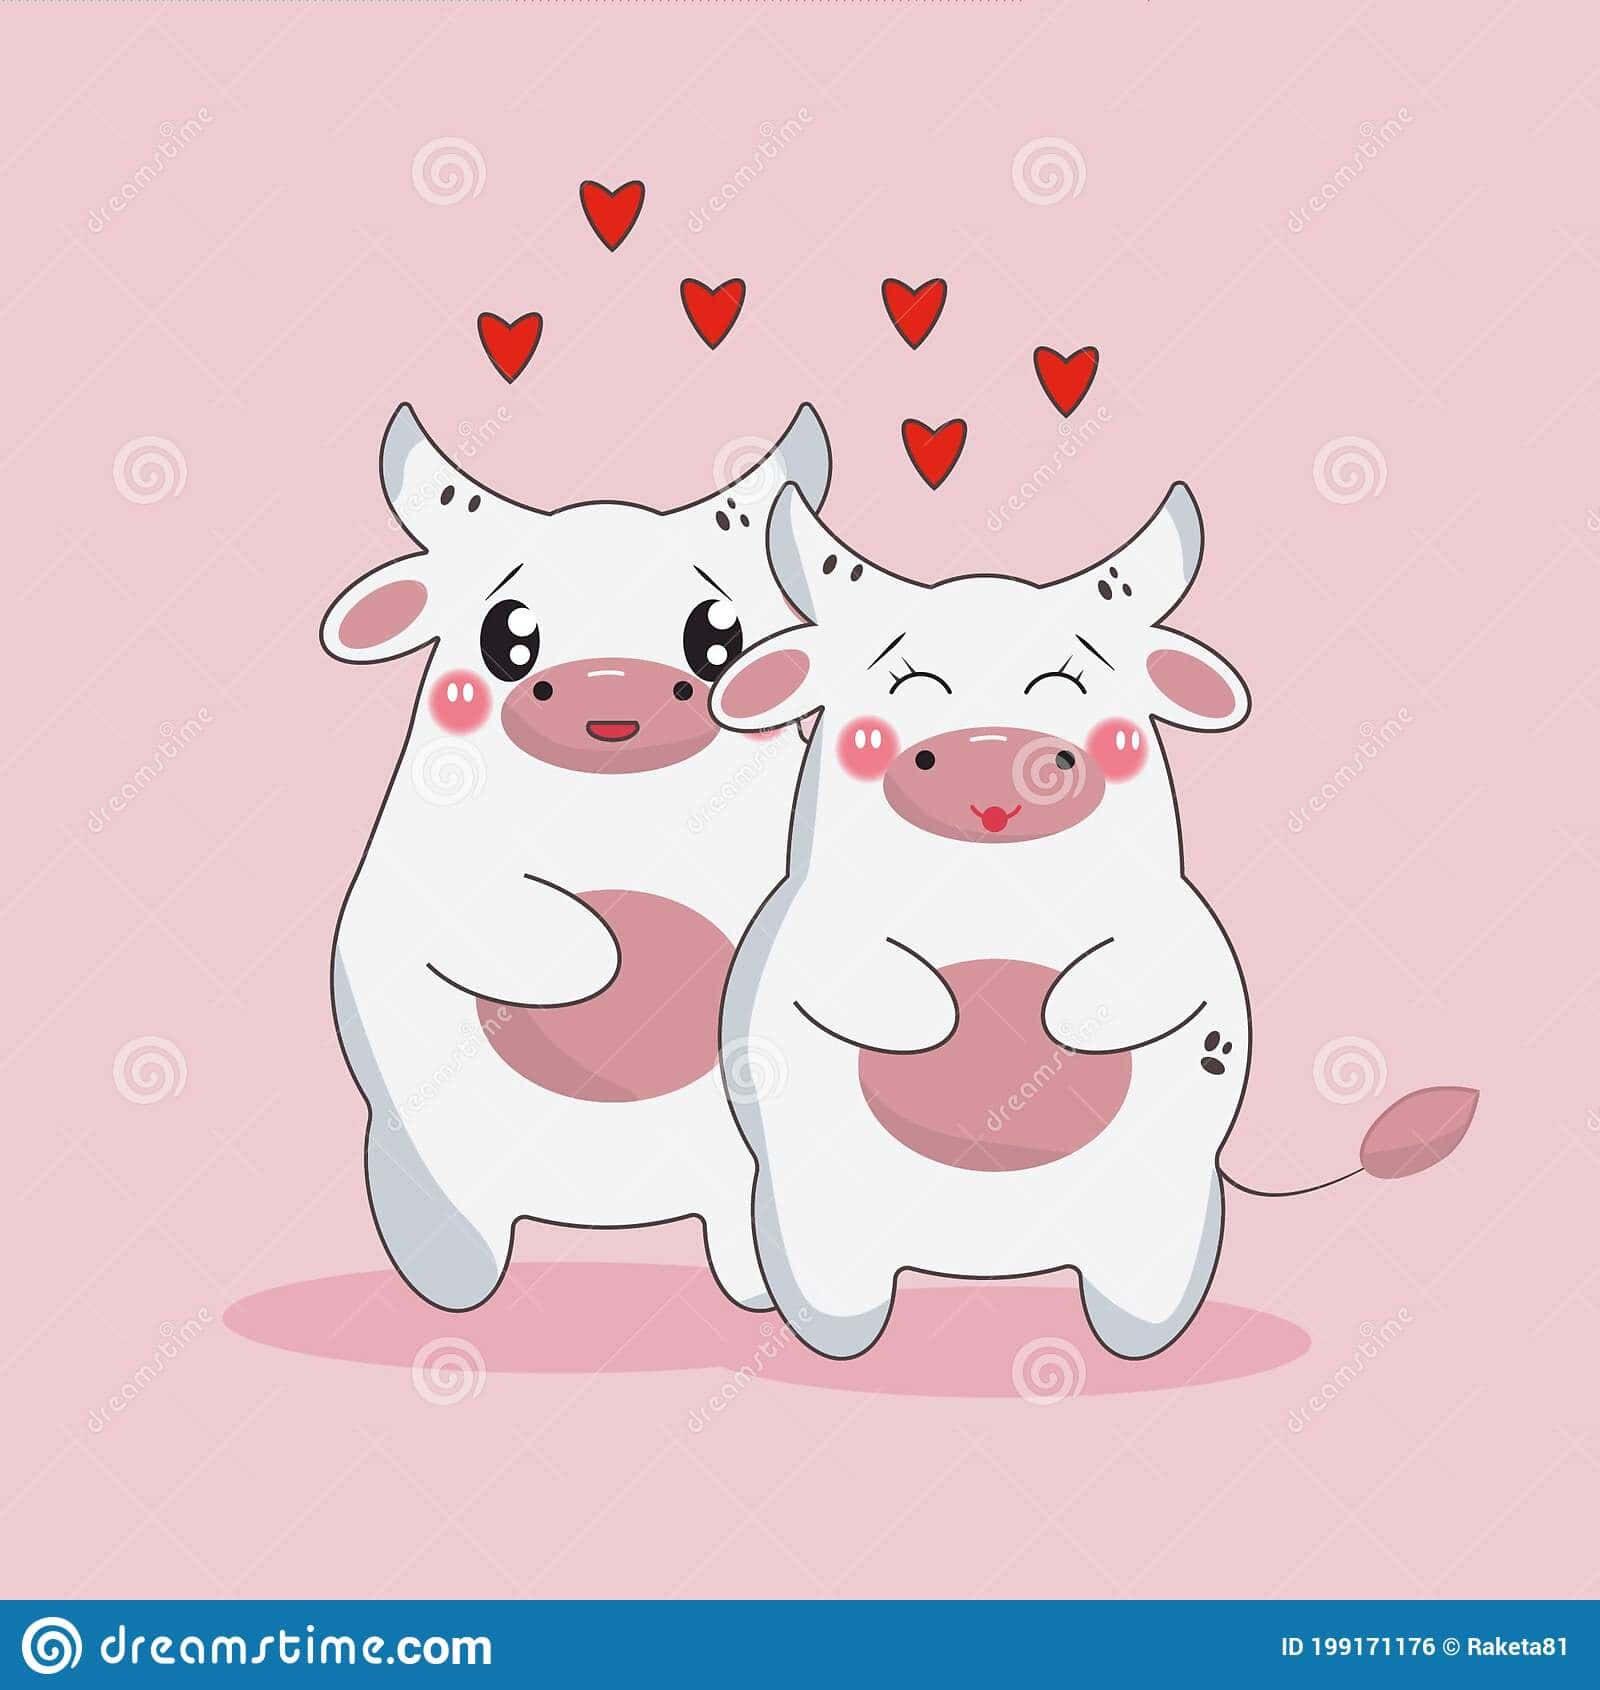 Enjoy the cuteness of this Kawaii Cow! Wallpaper